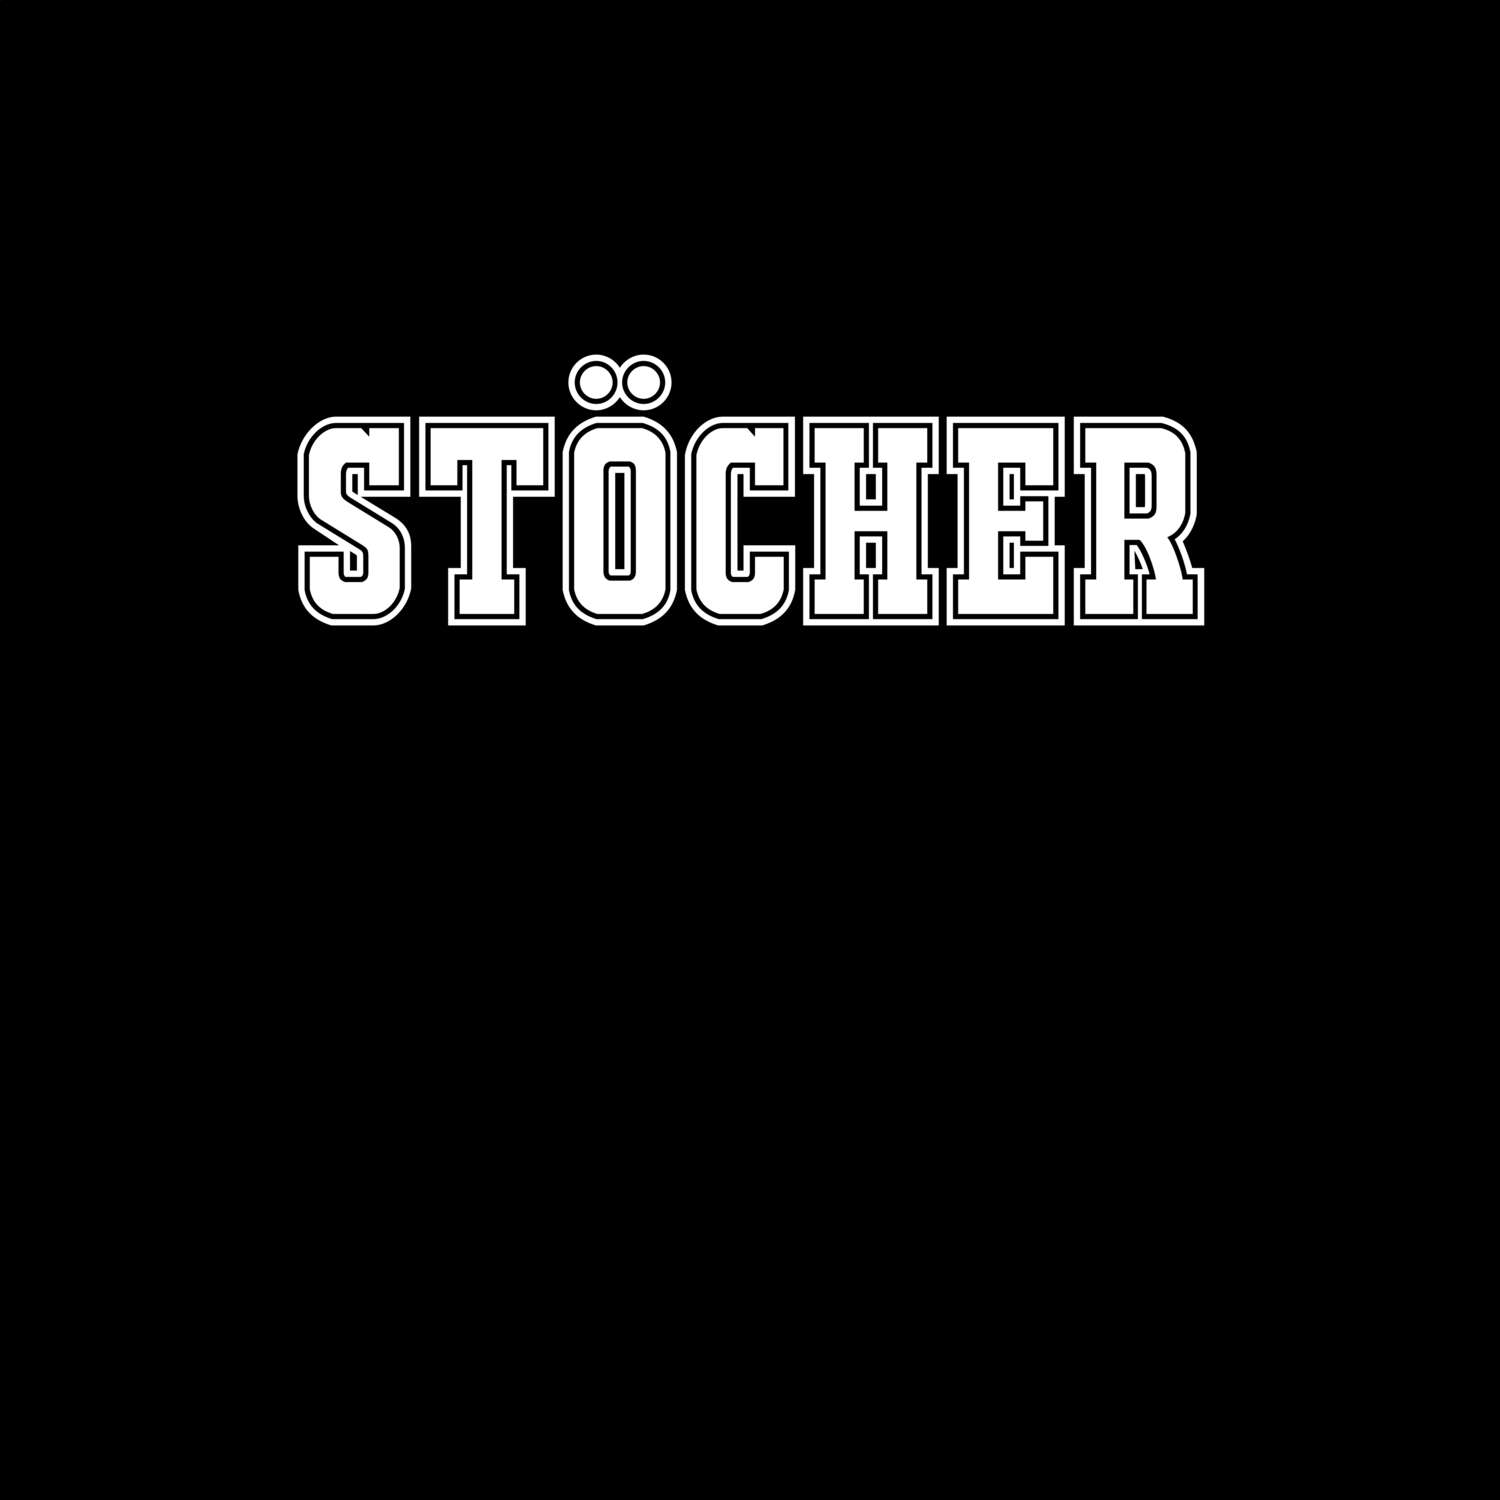 Stöcher T-Shirt »Classic«